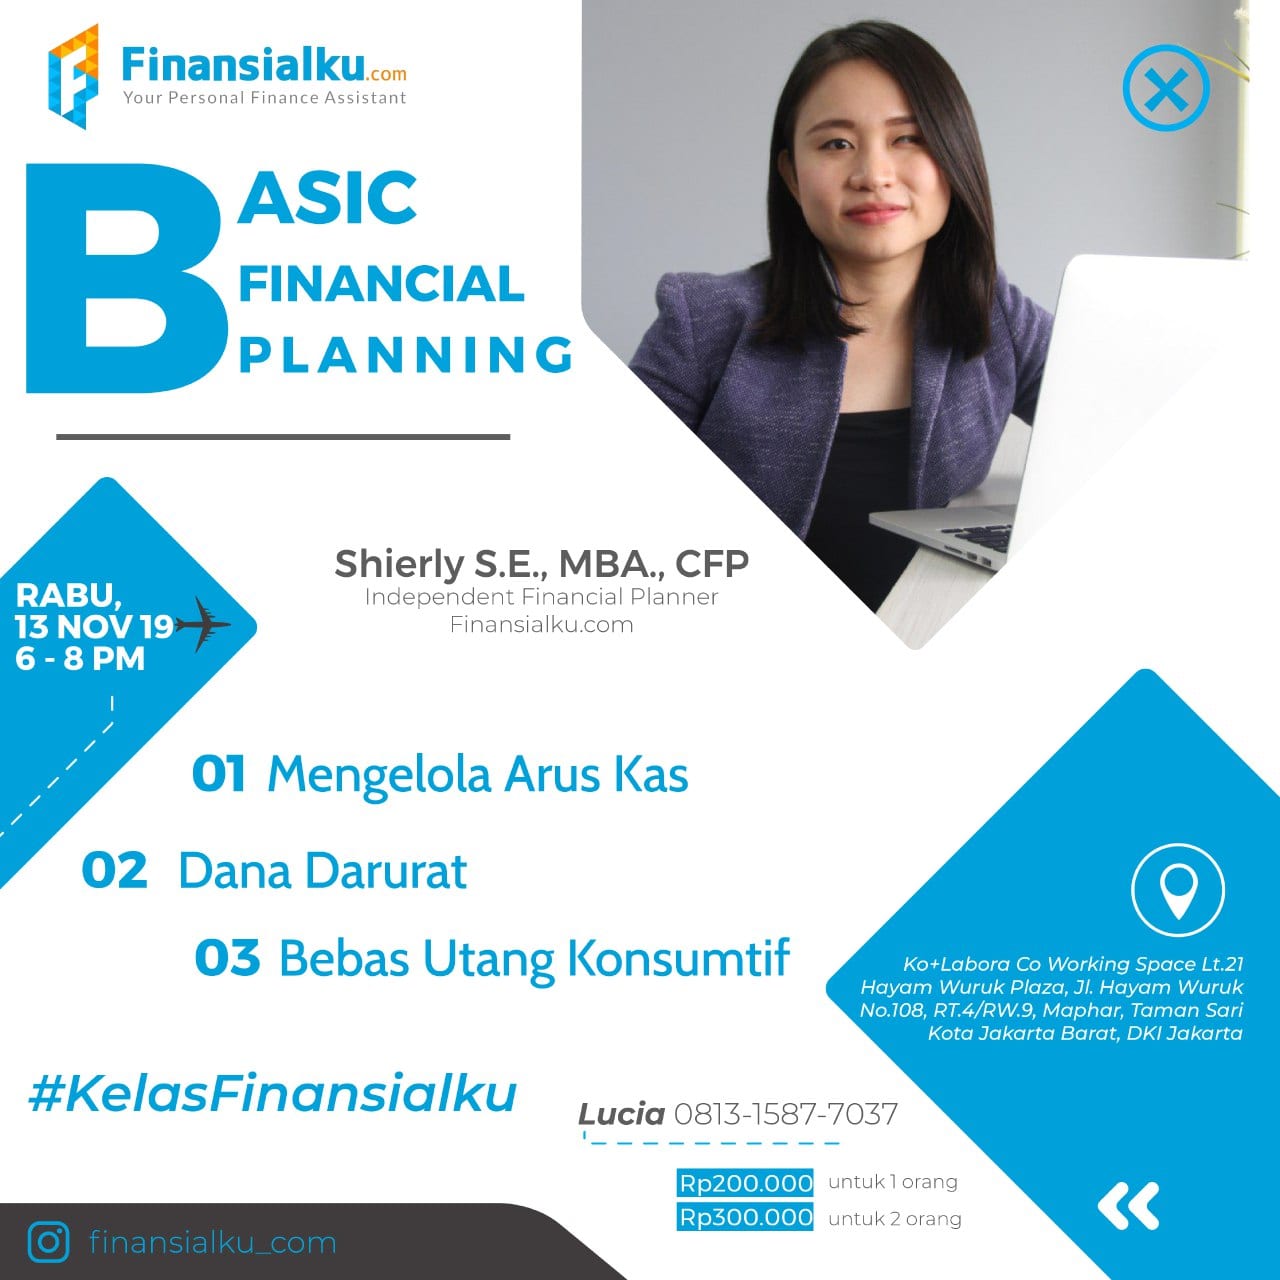 Basic Financial Planning 13 Nov 2019 Jakarta